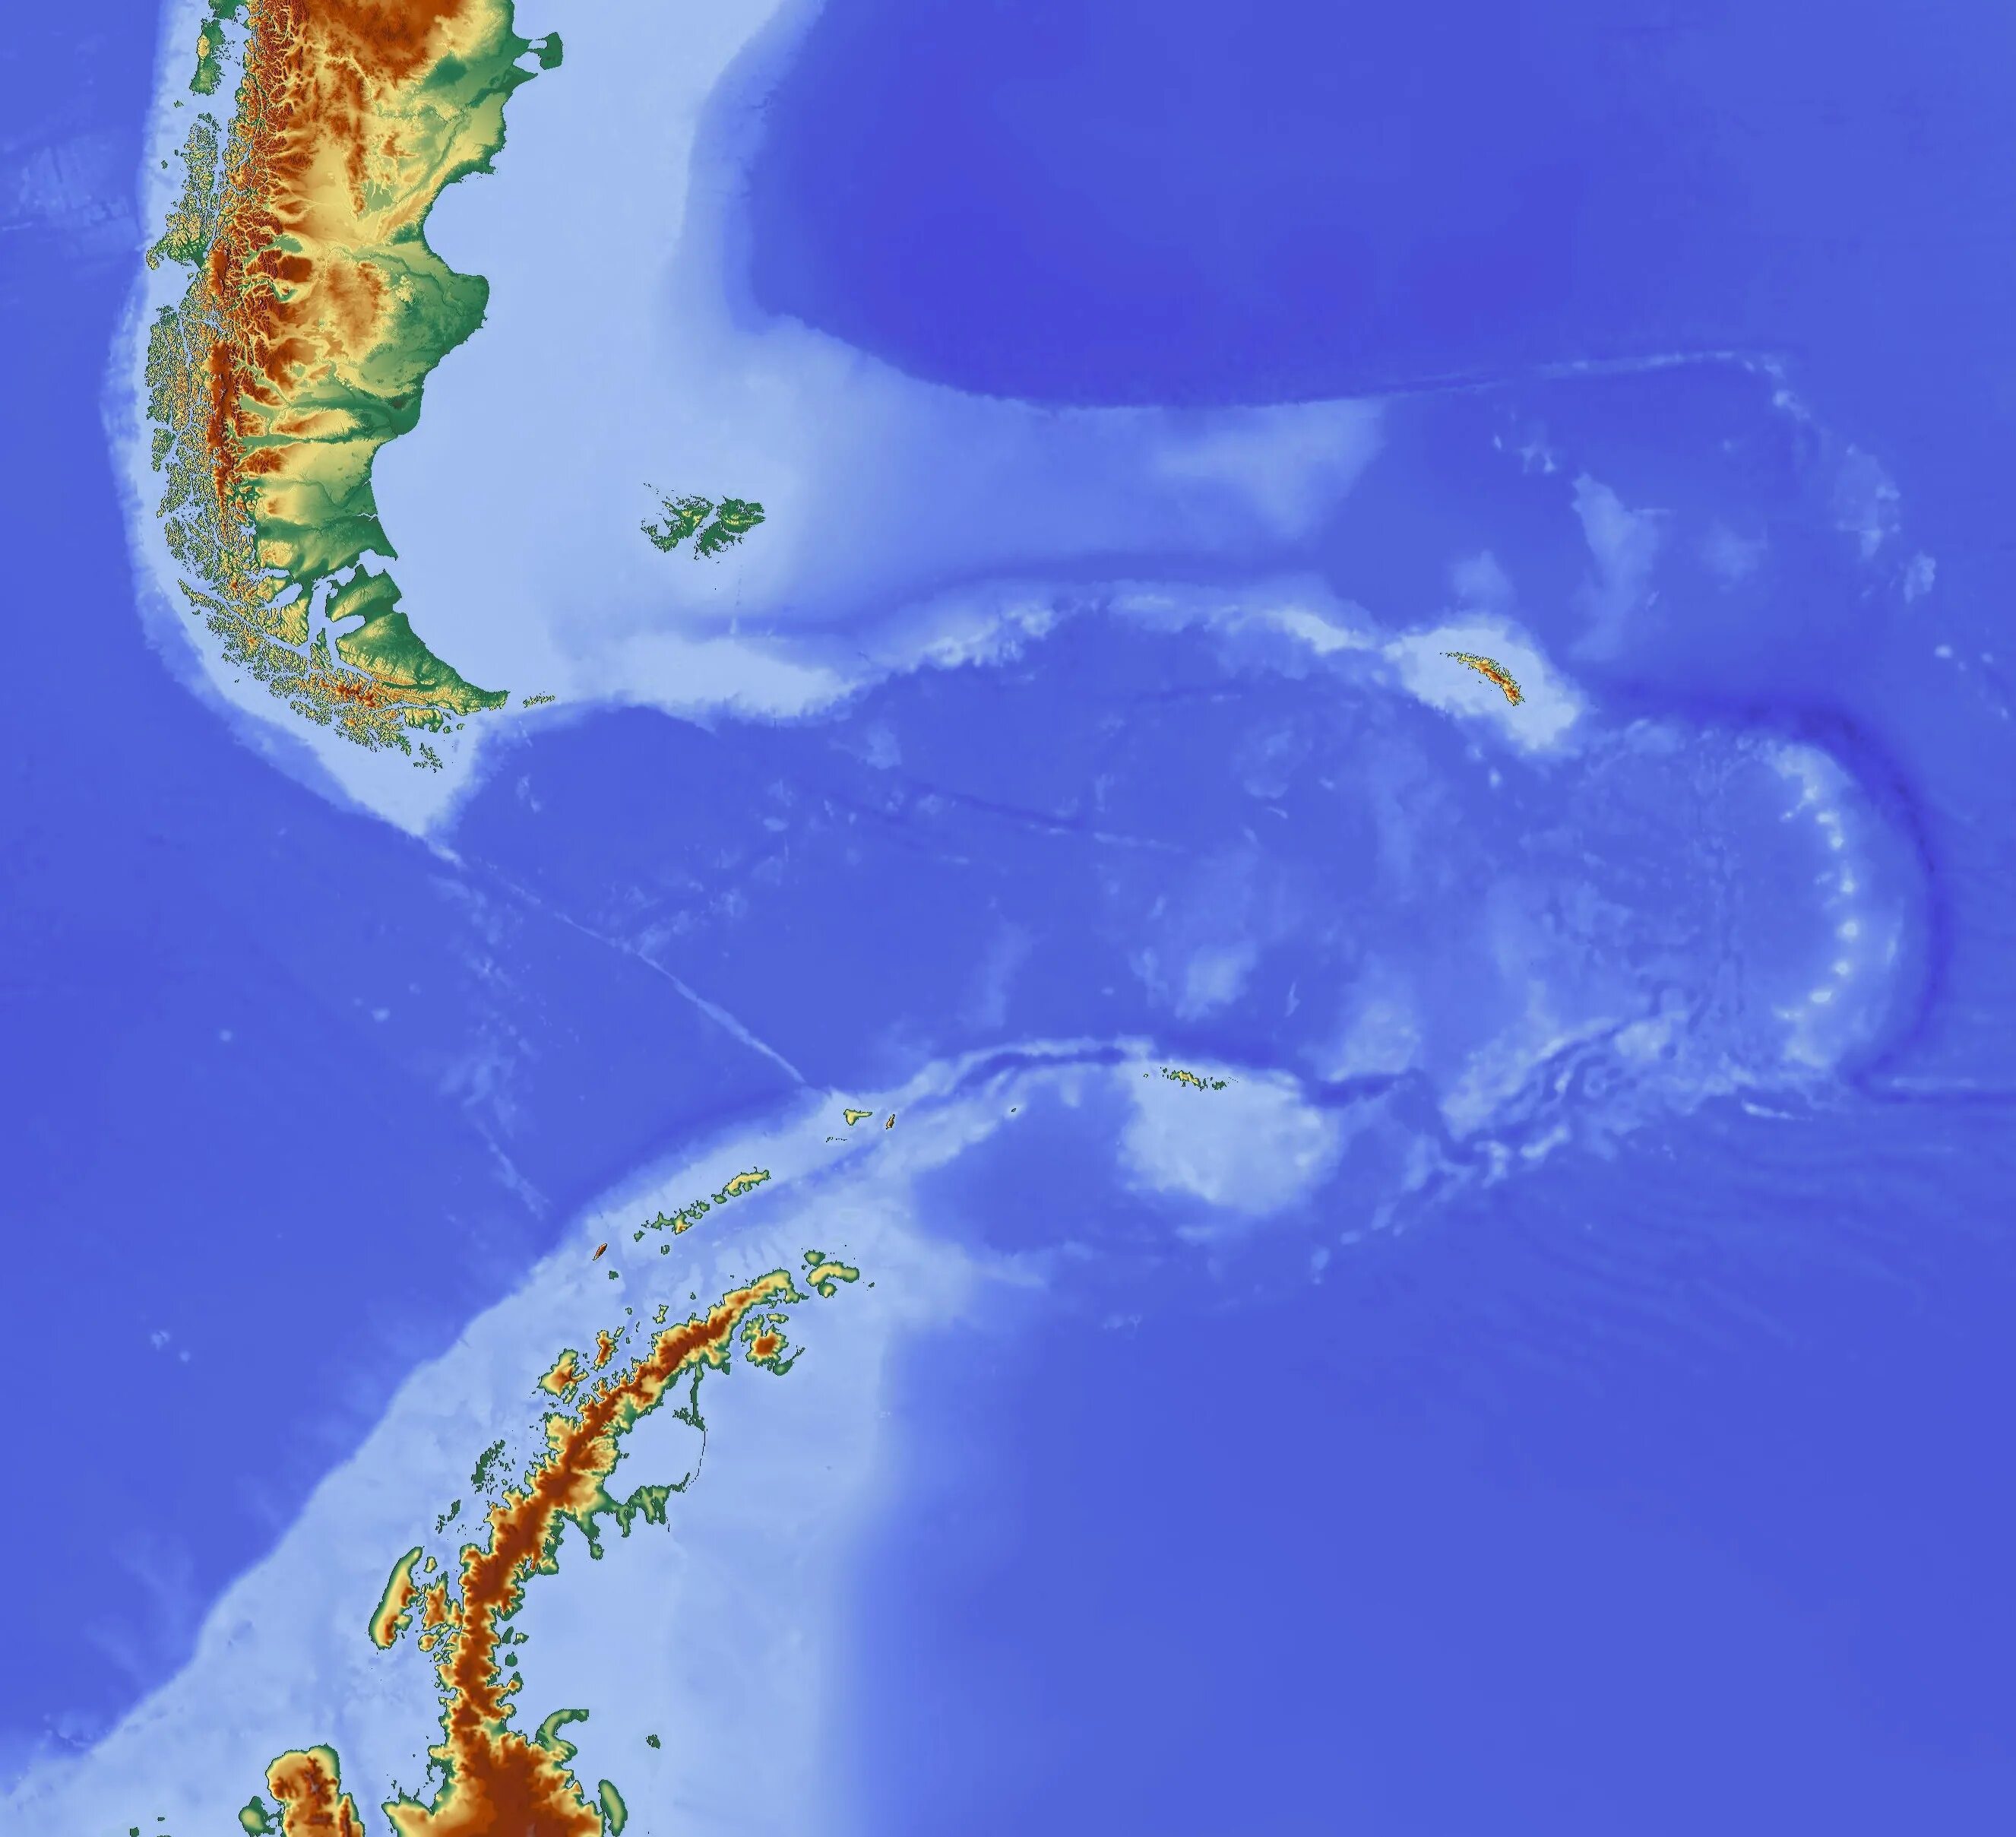 Пролив дрейка на карте тихого океана. Южная Америка пролив Дрейка. Мыс горн пролив Дрейка. Пролив Дрейка Антарктида. Пролив Дрейка проливы.